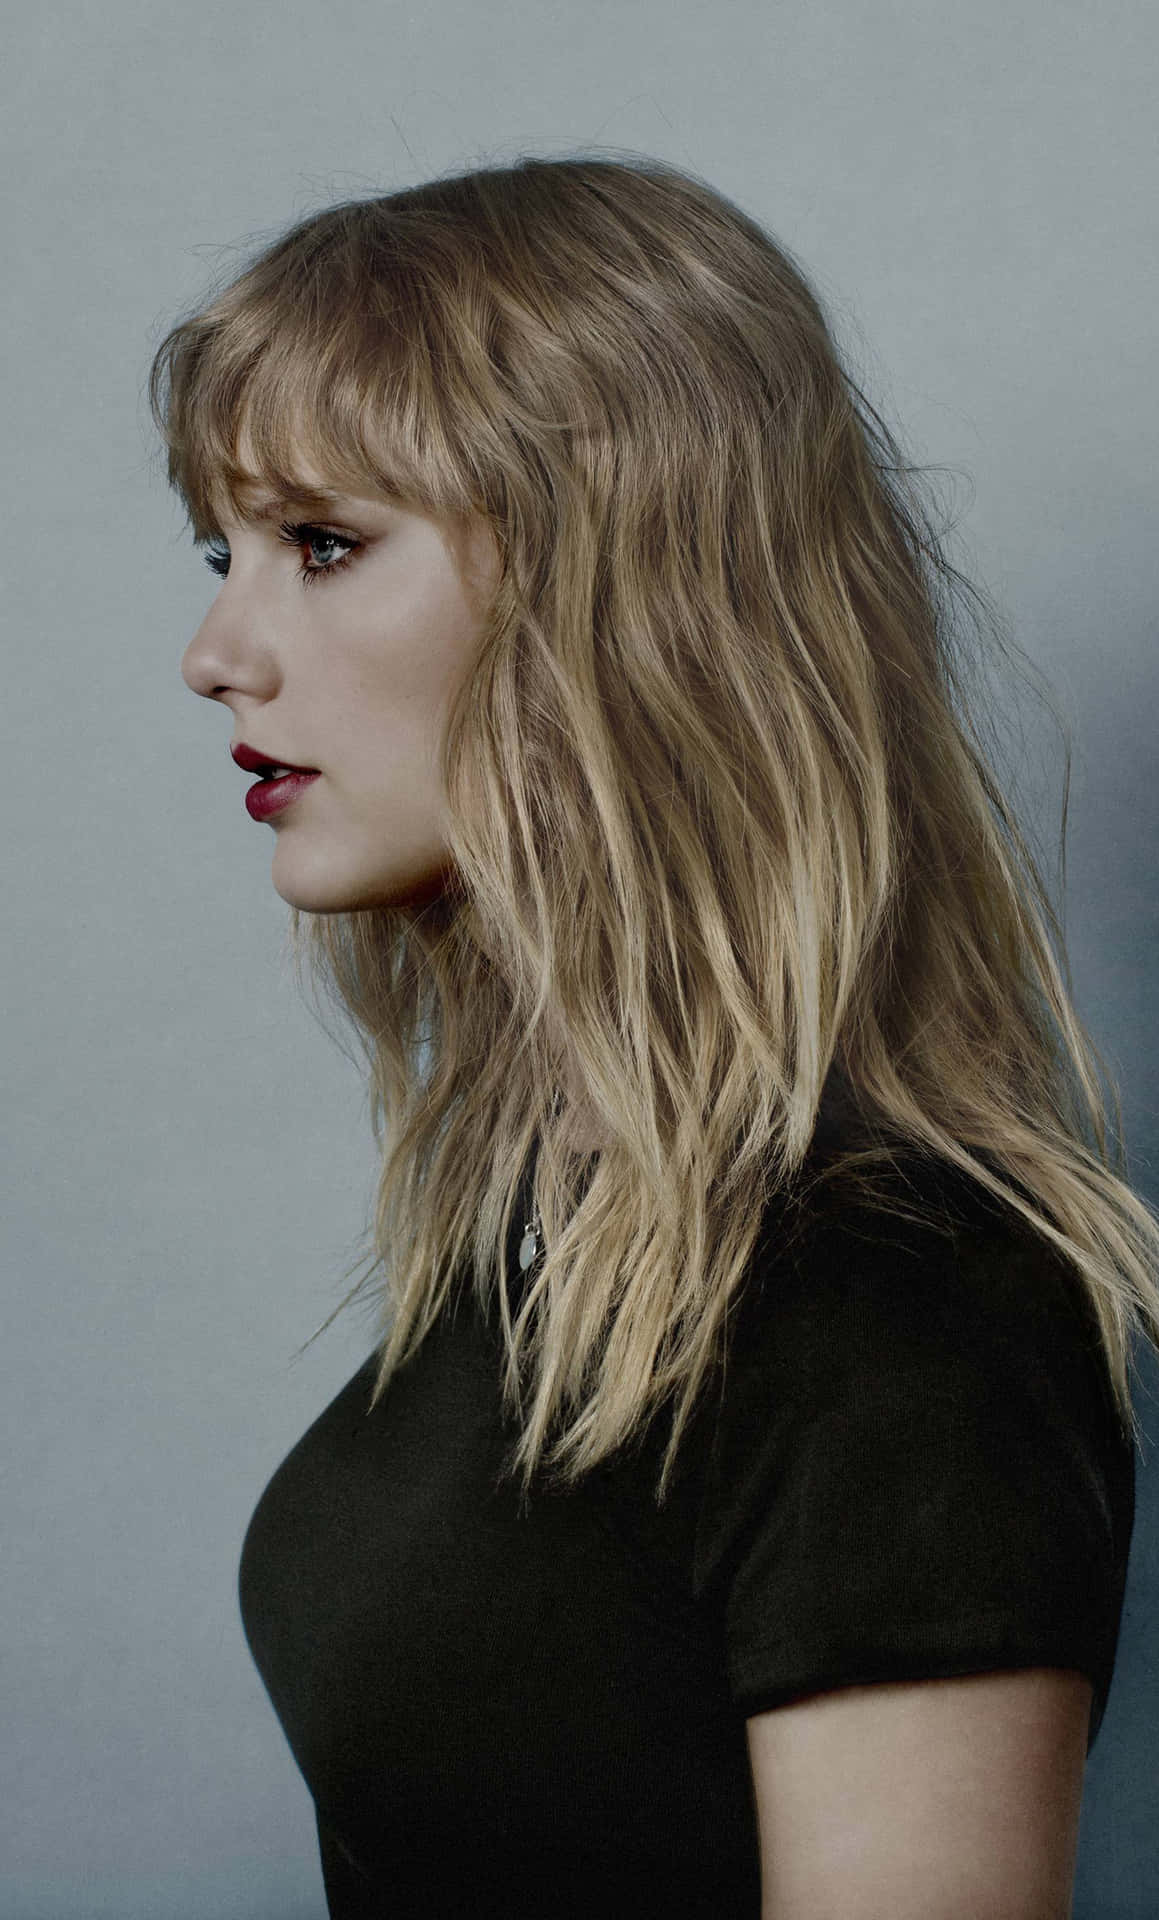 Caption: Grammy-winning Artist: Taylor Swift By The Beach